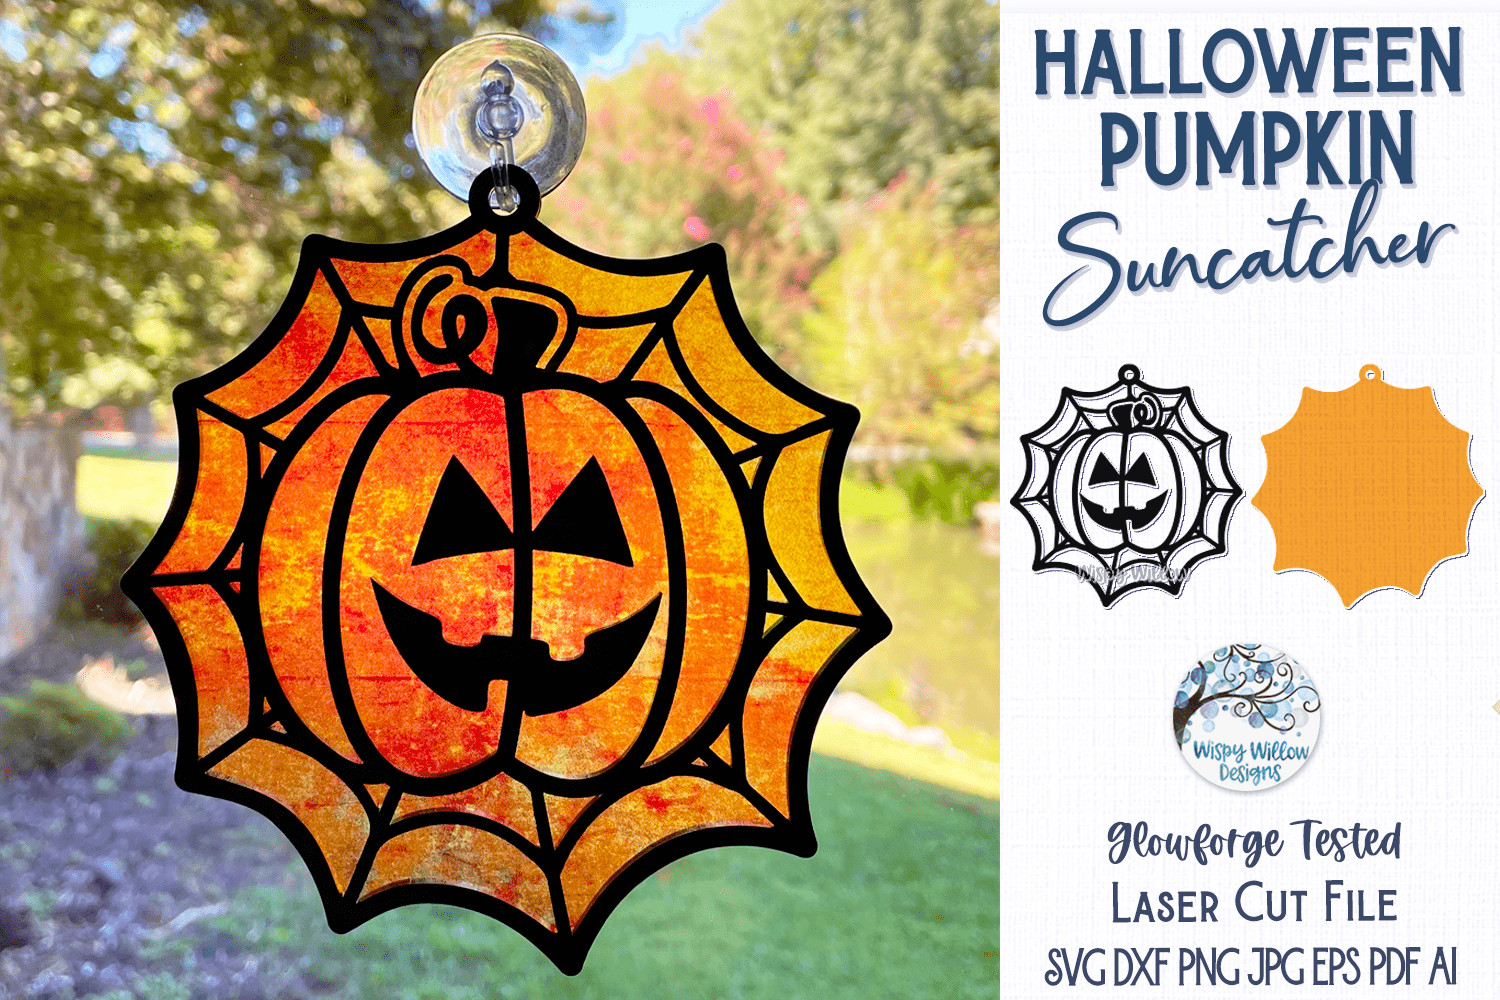 Halloween Pumpkin Suncatcher for Glowforge Laser Cutter Wispy Willow Designs Company